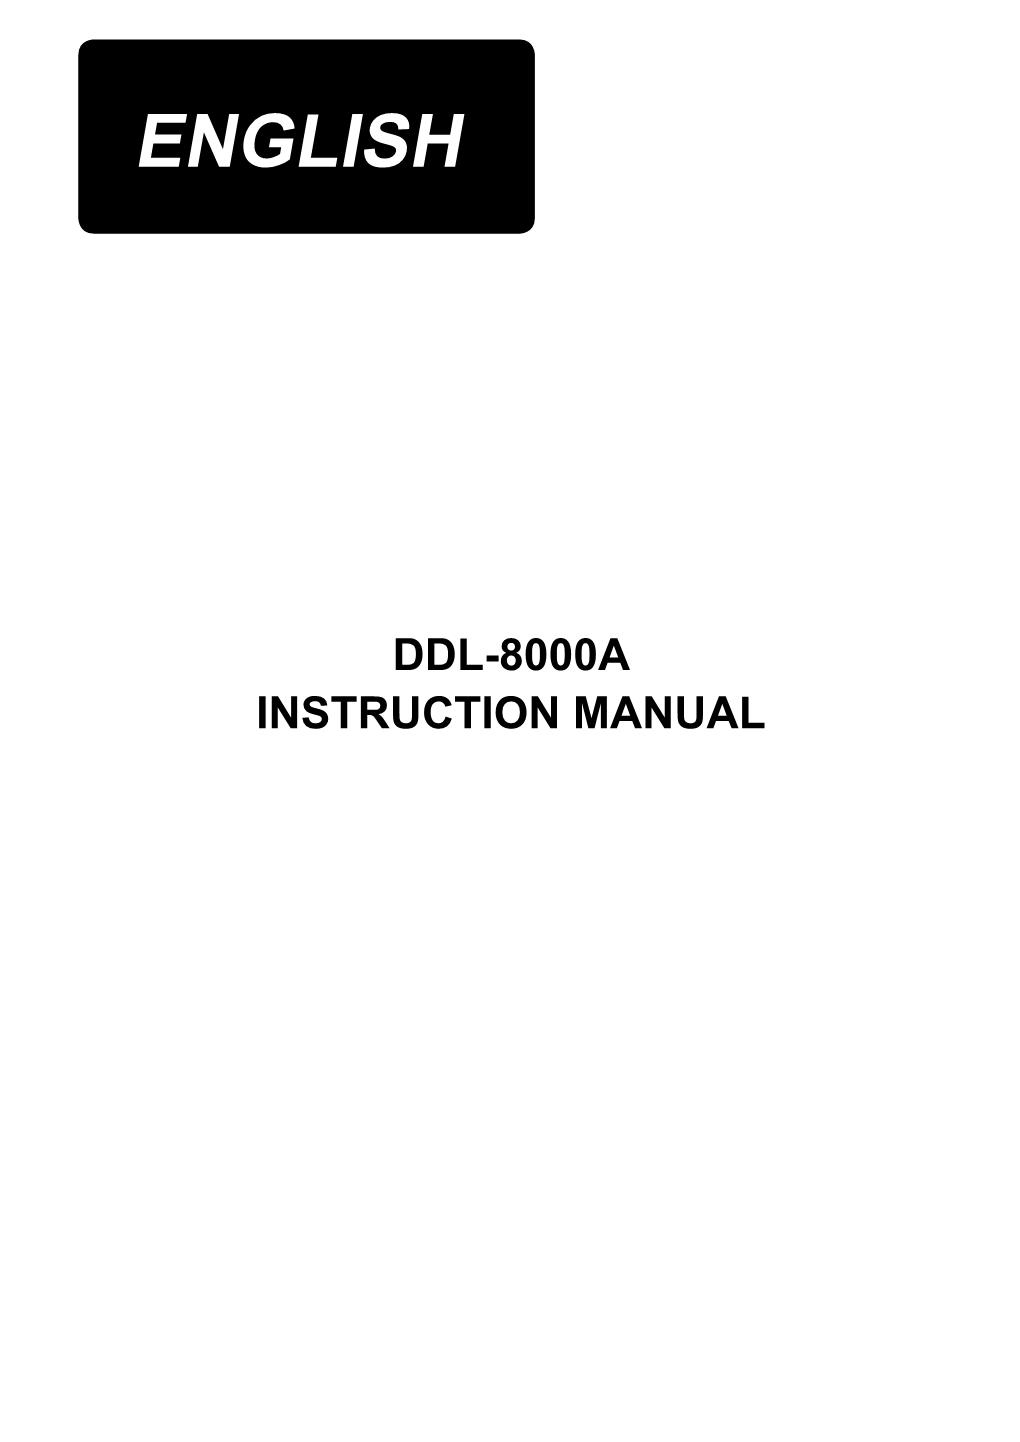 Ddl-8000A Instruction Manual Contents